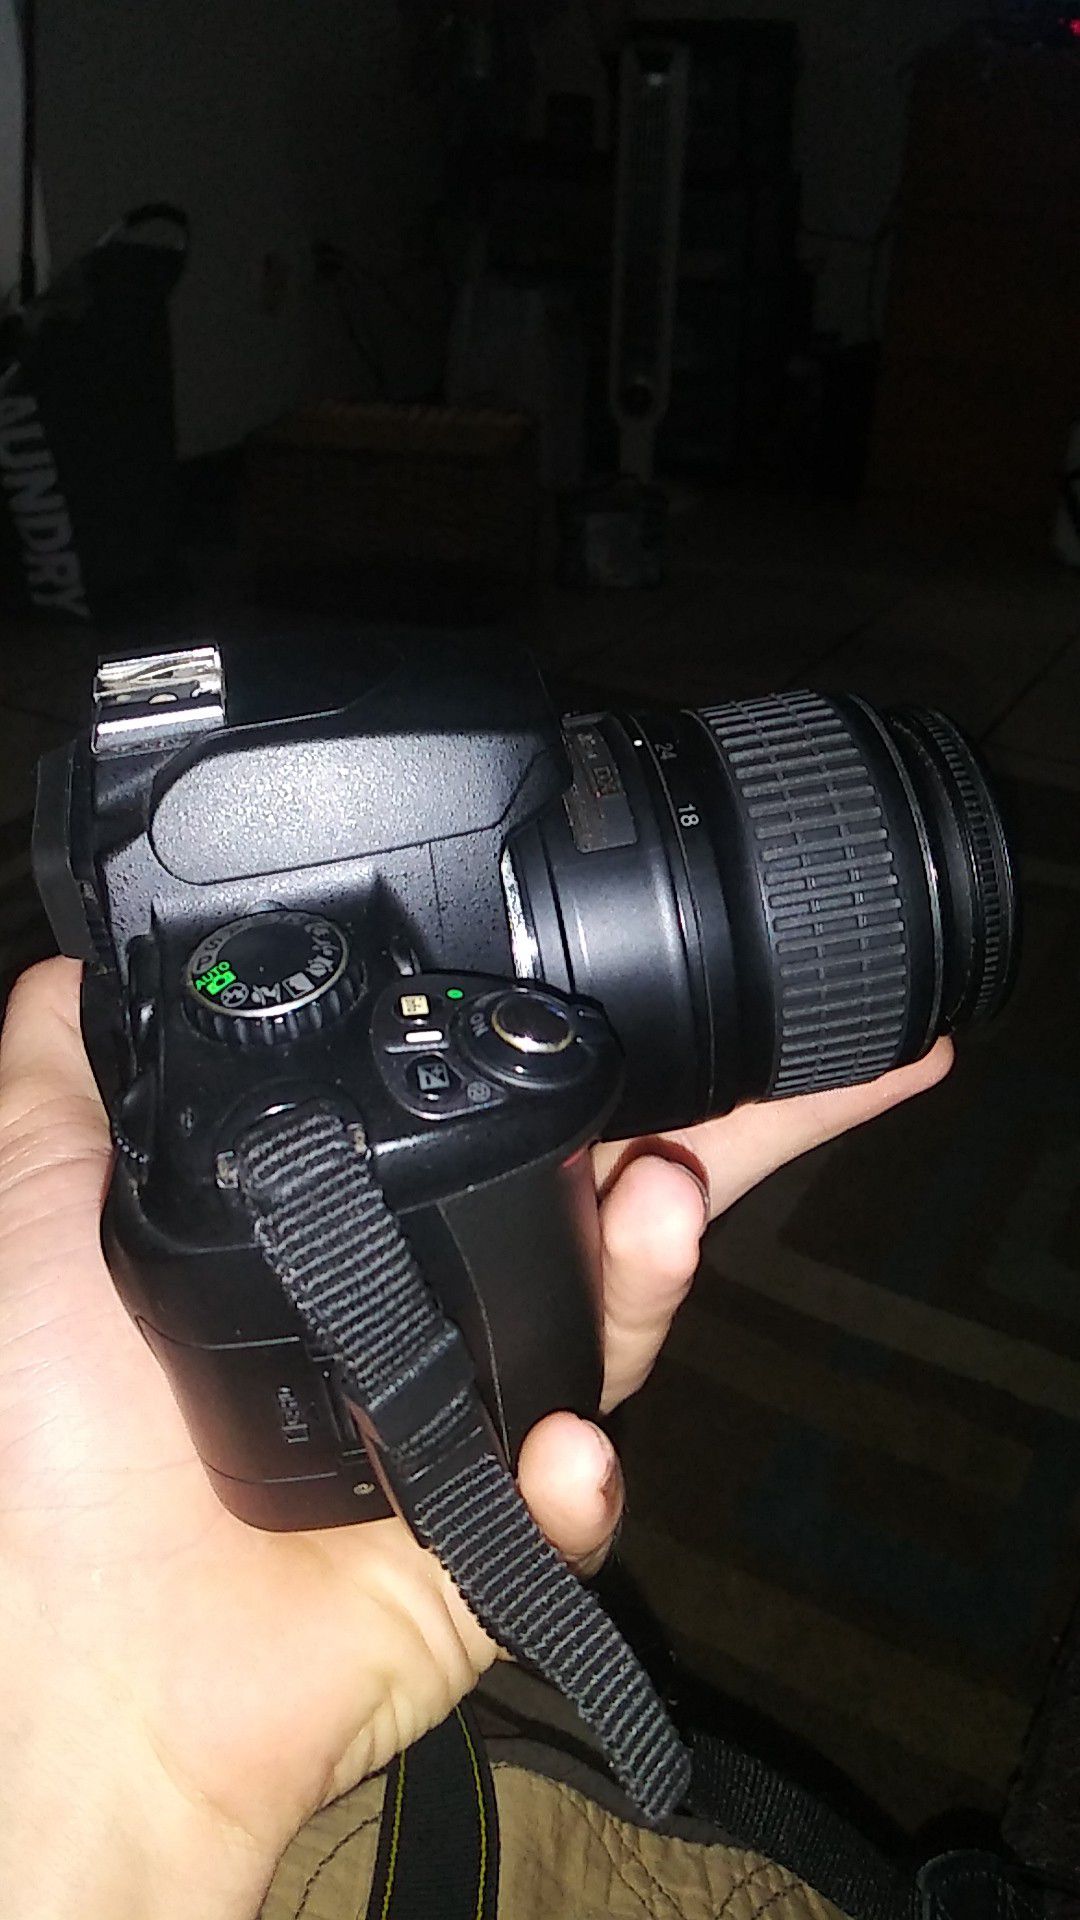 Nikon D40 Digital Camera with case and Tripod